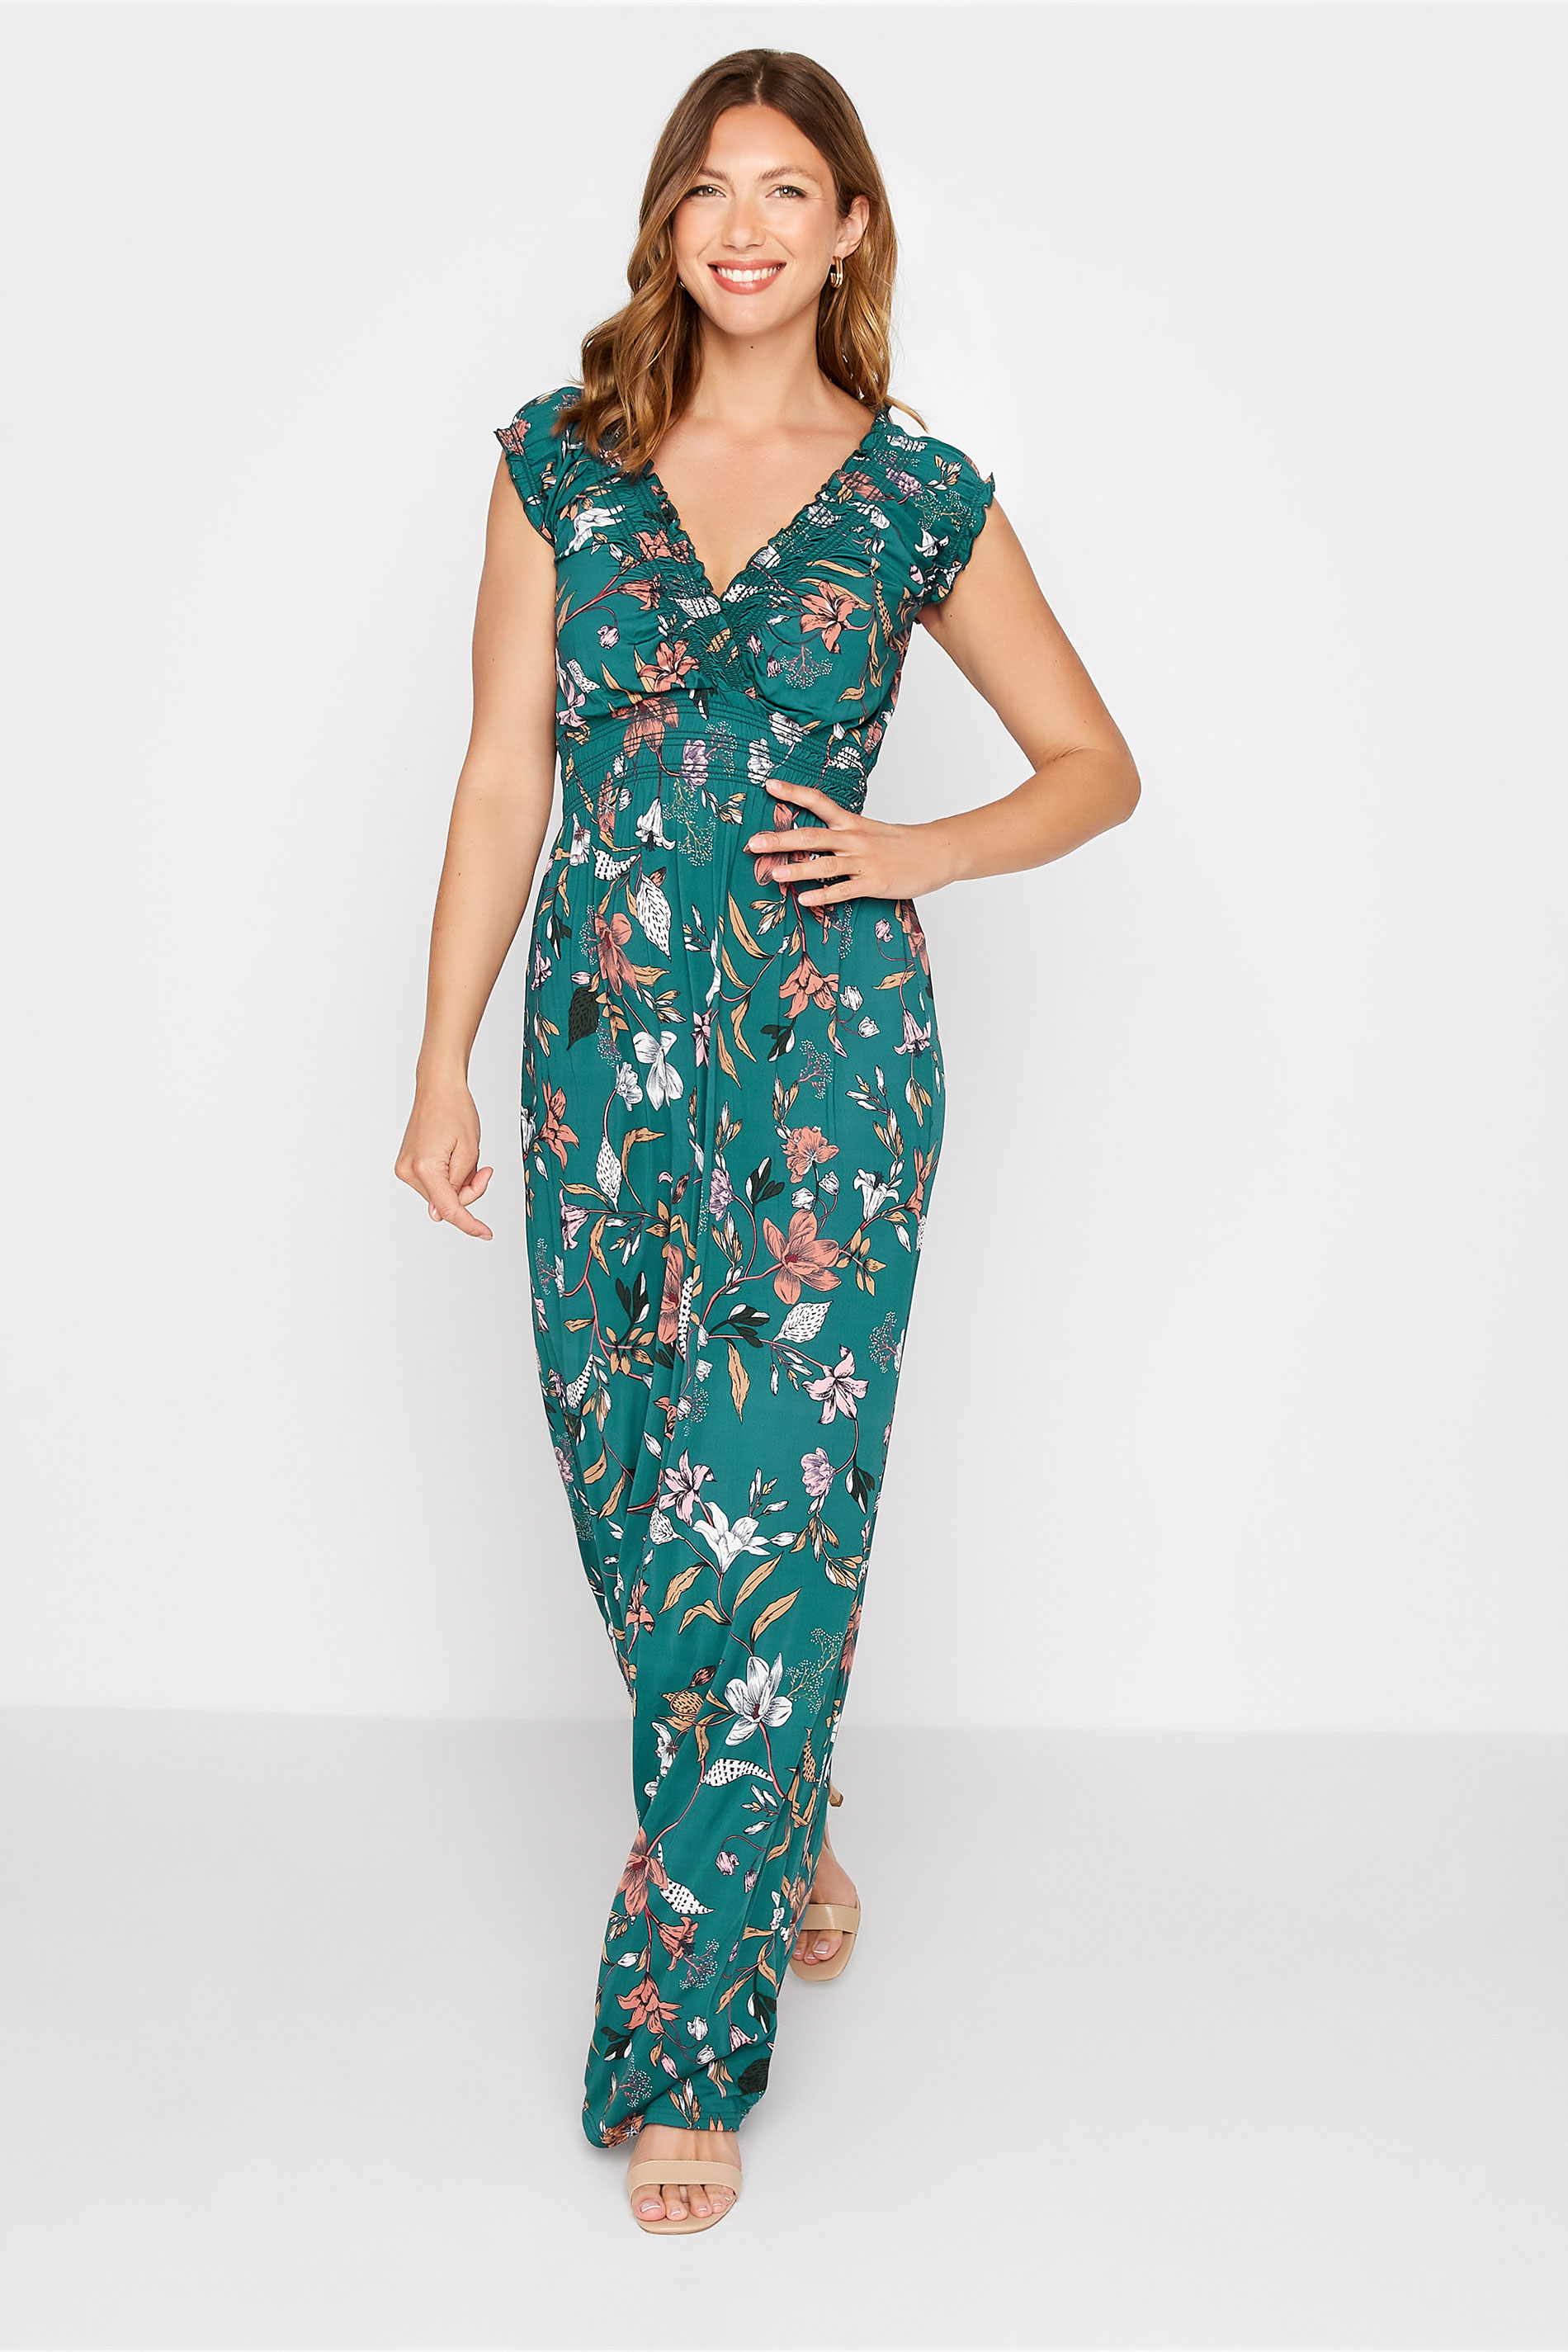 LTS Tall Women's Teal Green Floral Print Maxi Dress | Long Tall Sally 1